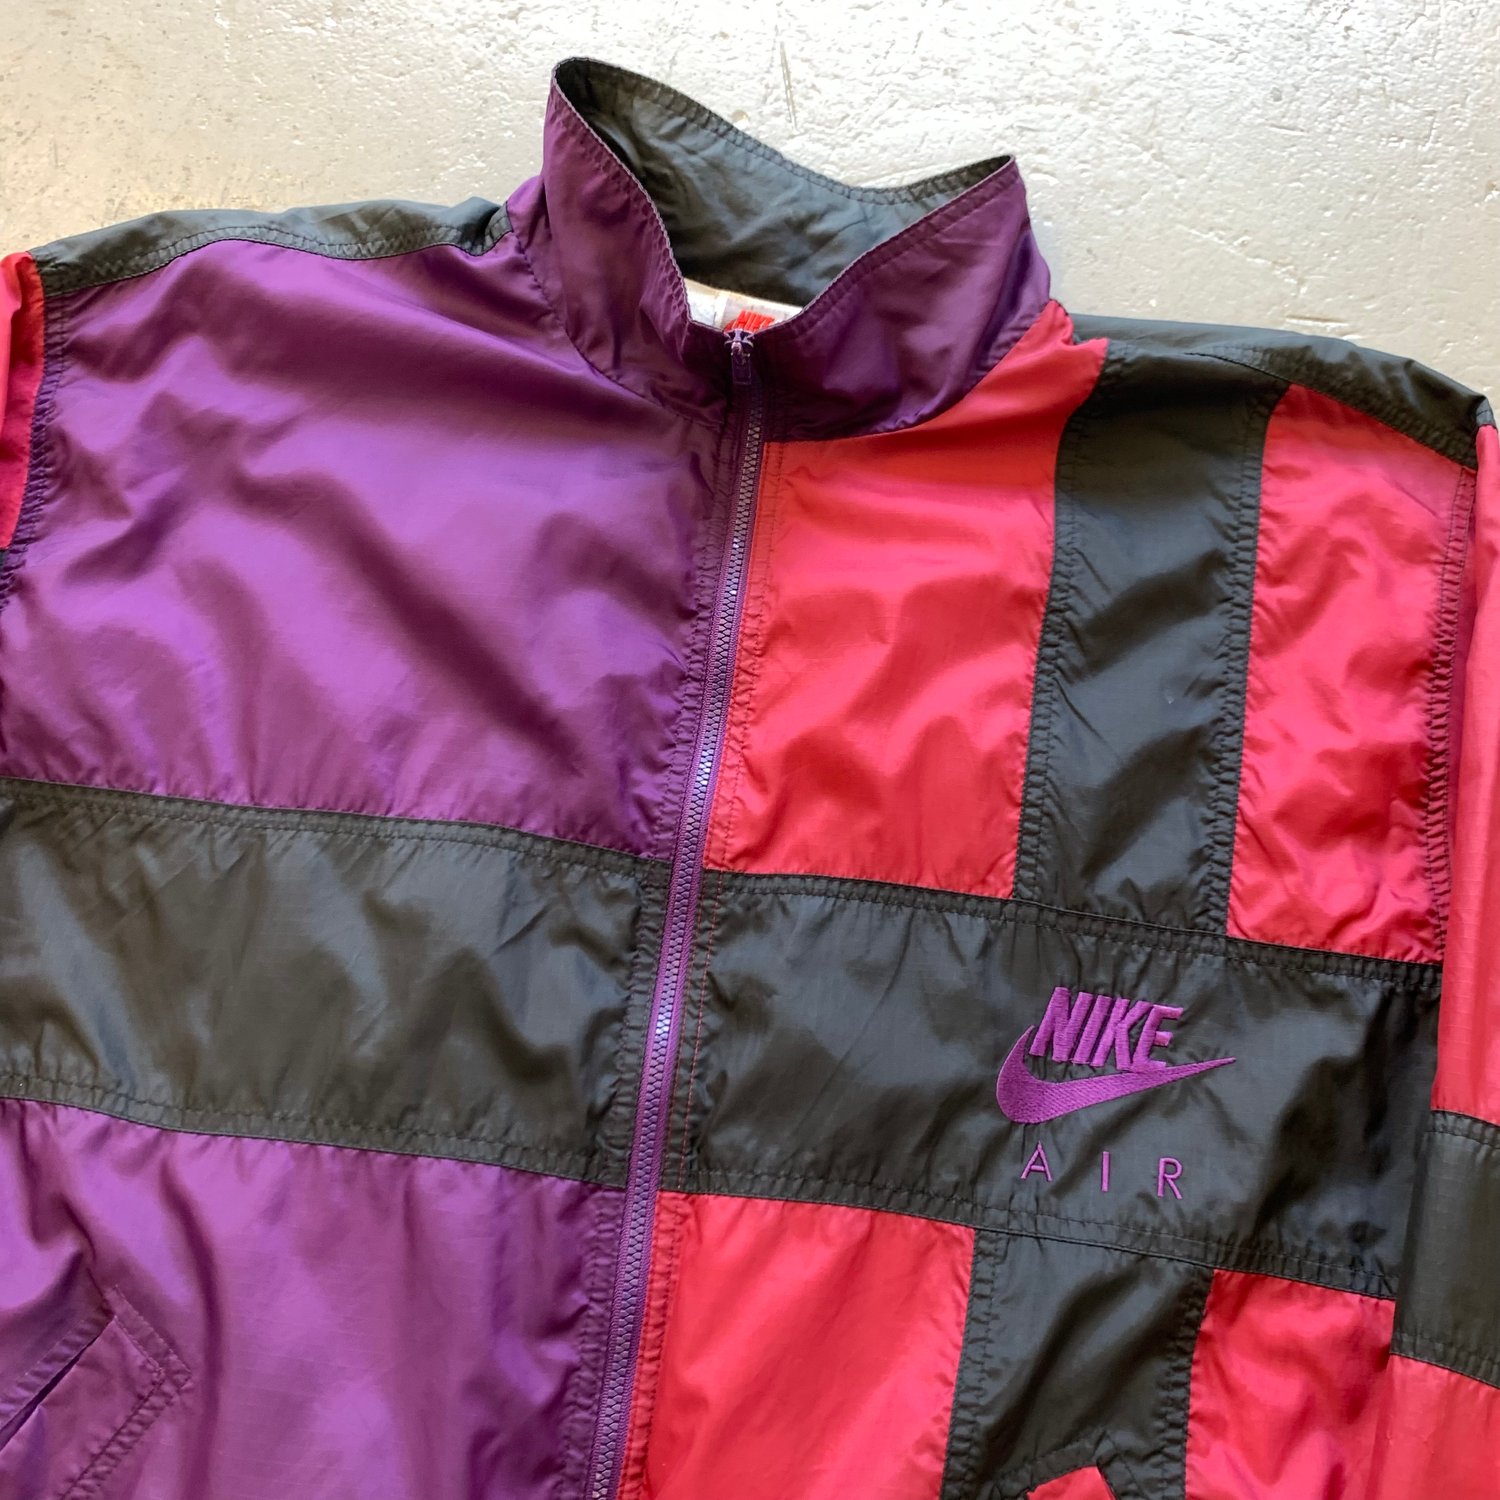 Image of RARE 80s/90s Nike Air windbreaker jacket size xl 